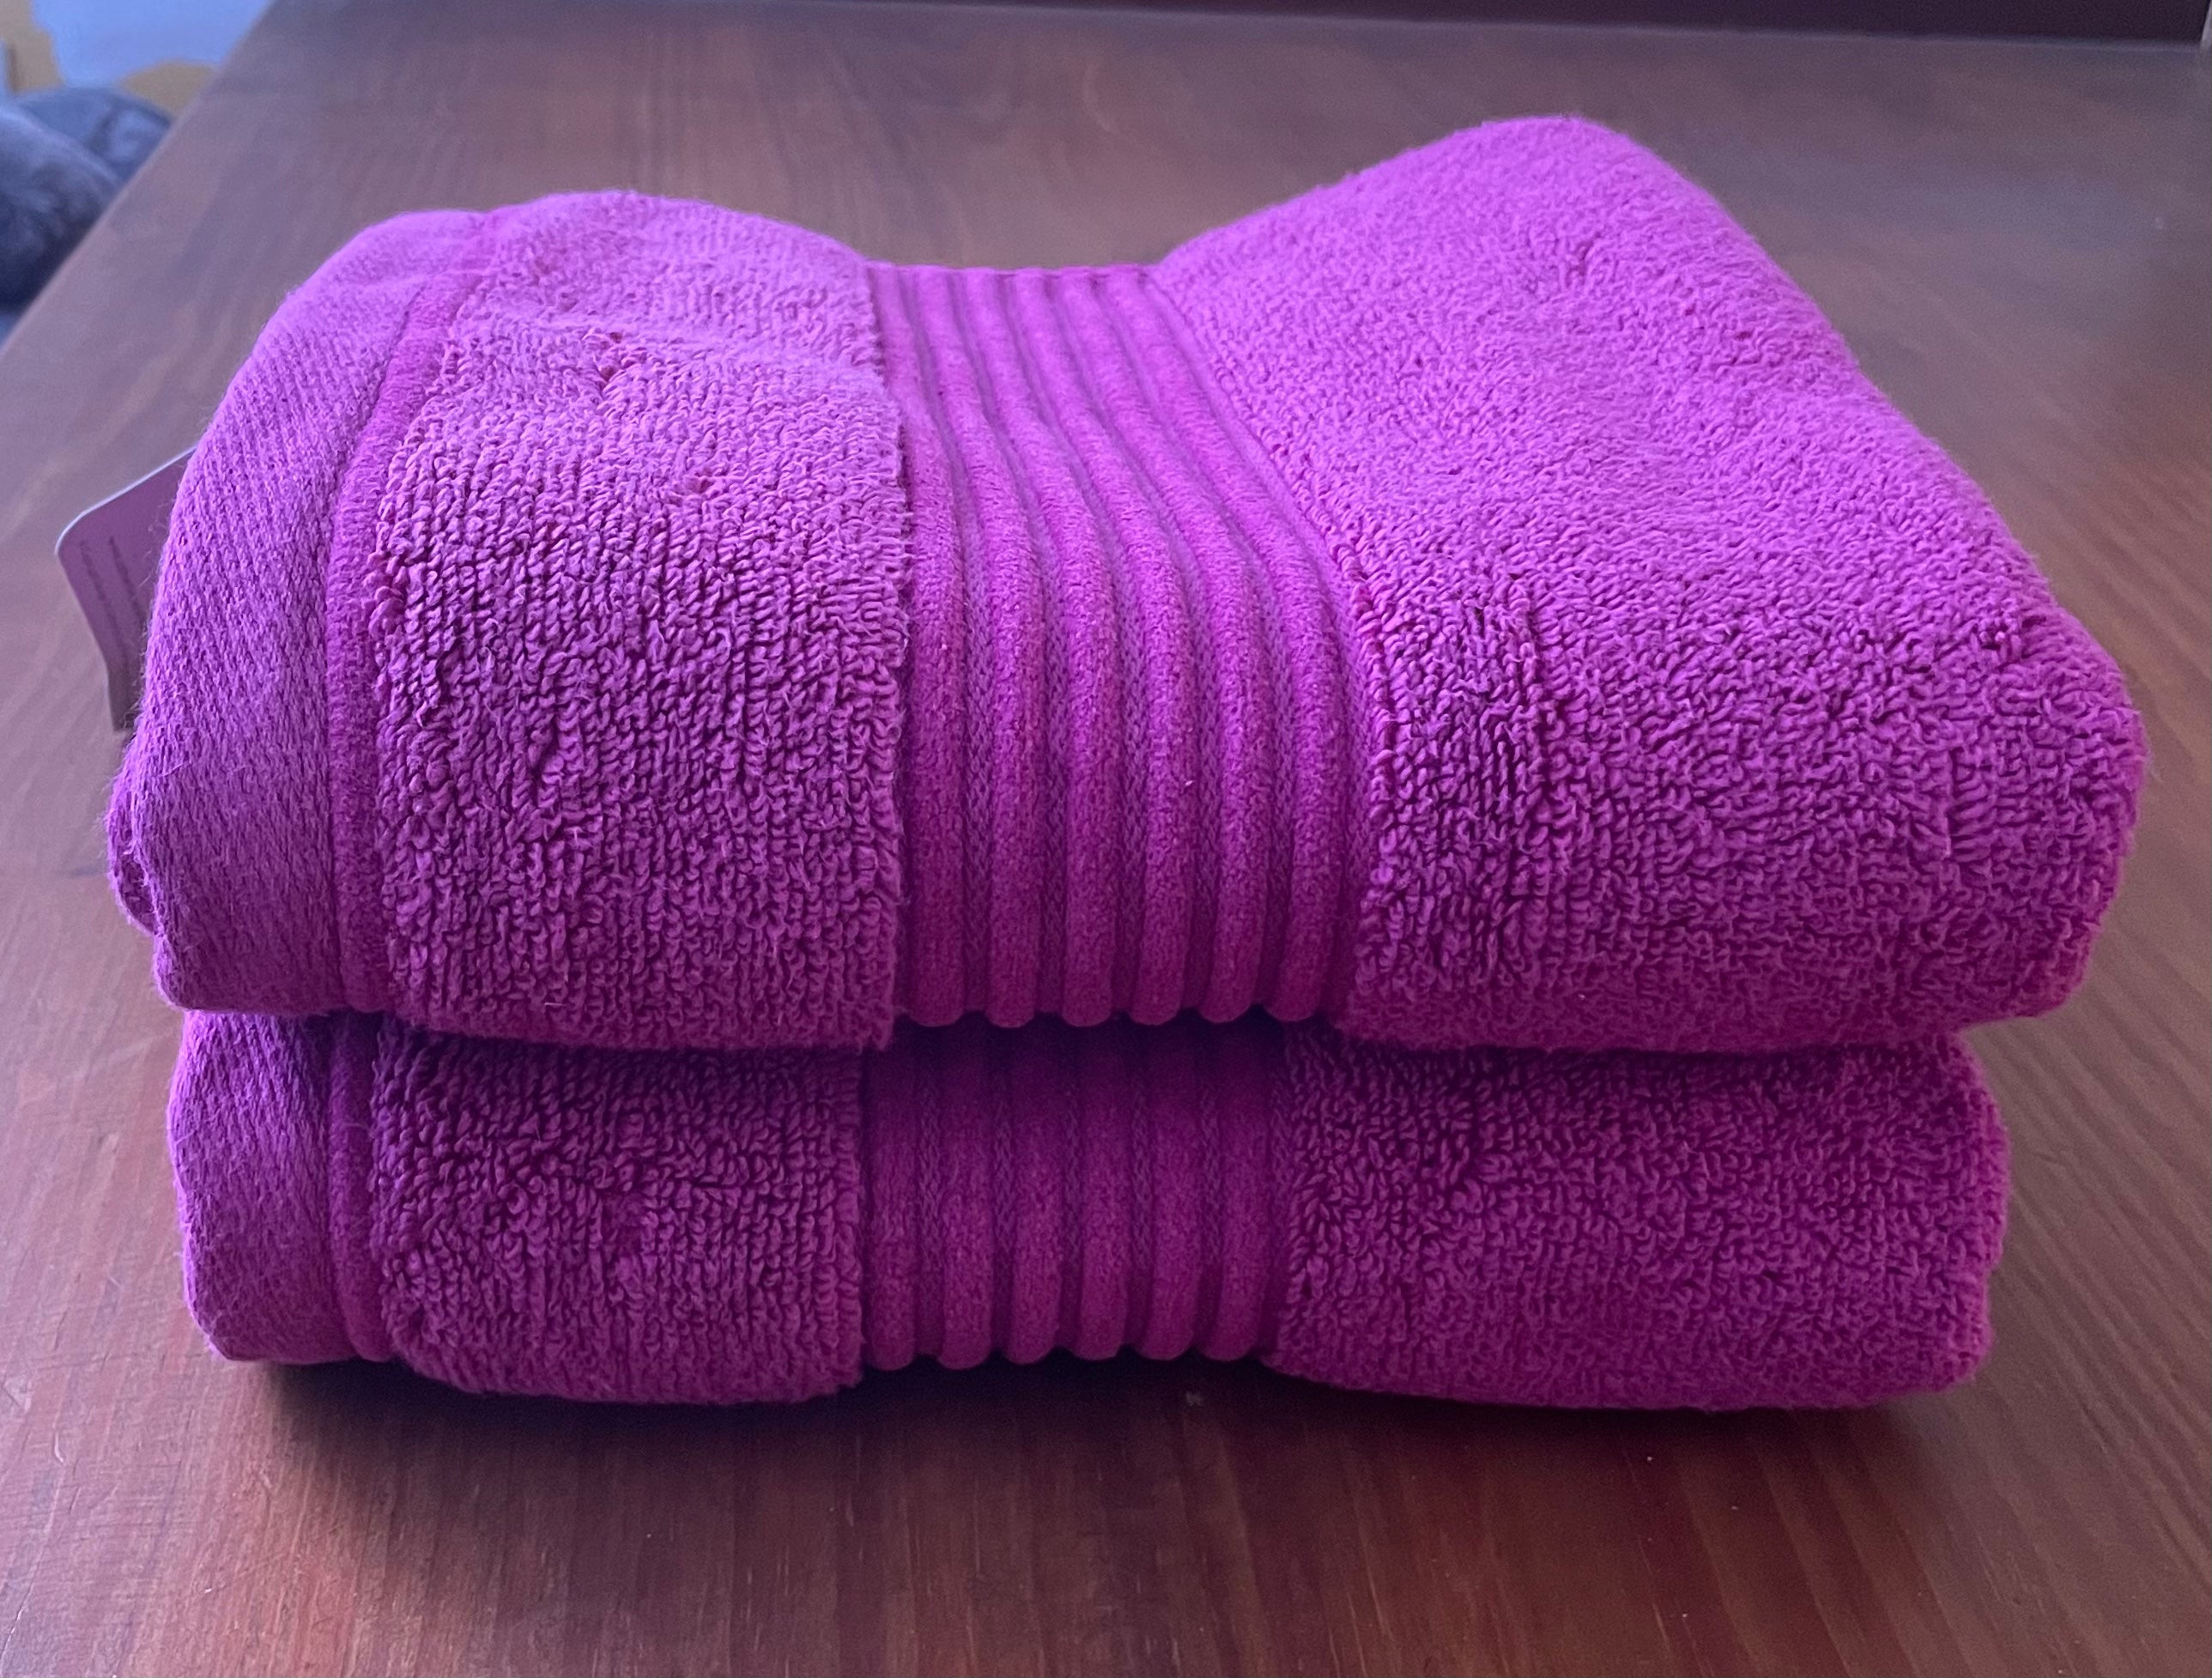 650g Cotton Towels - Magenta - 2 Hand Towels